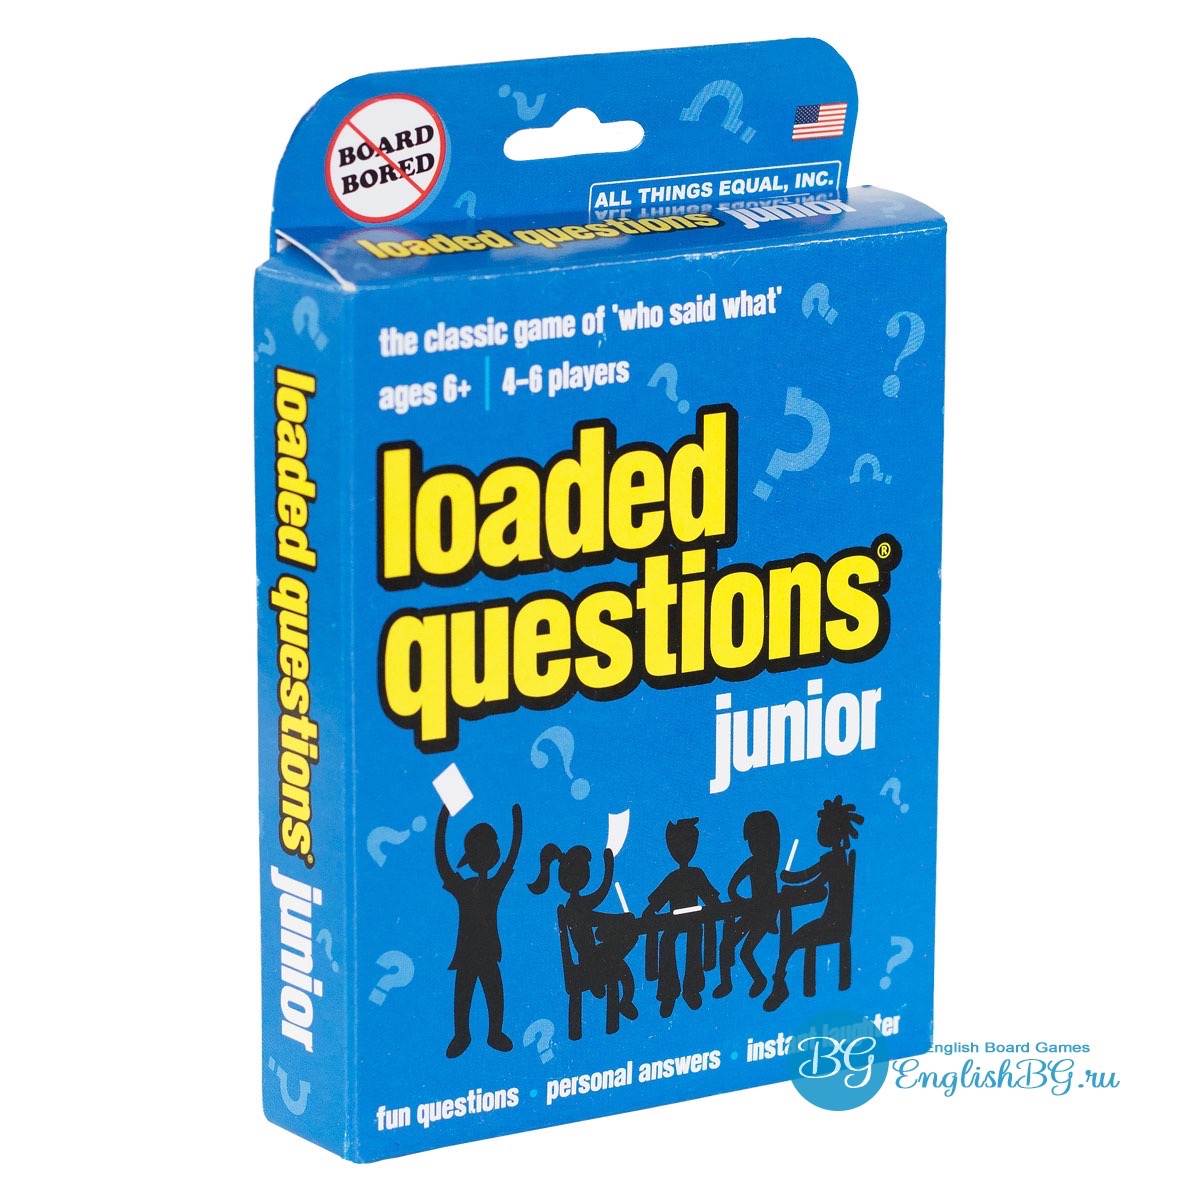 loaded questions game idaho falls